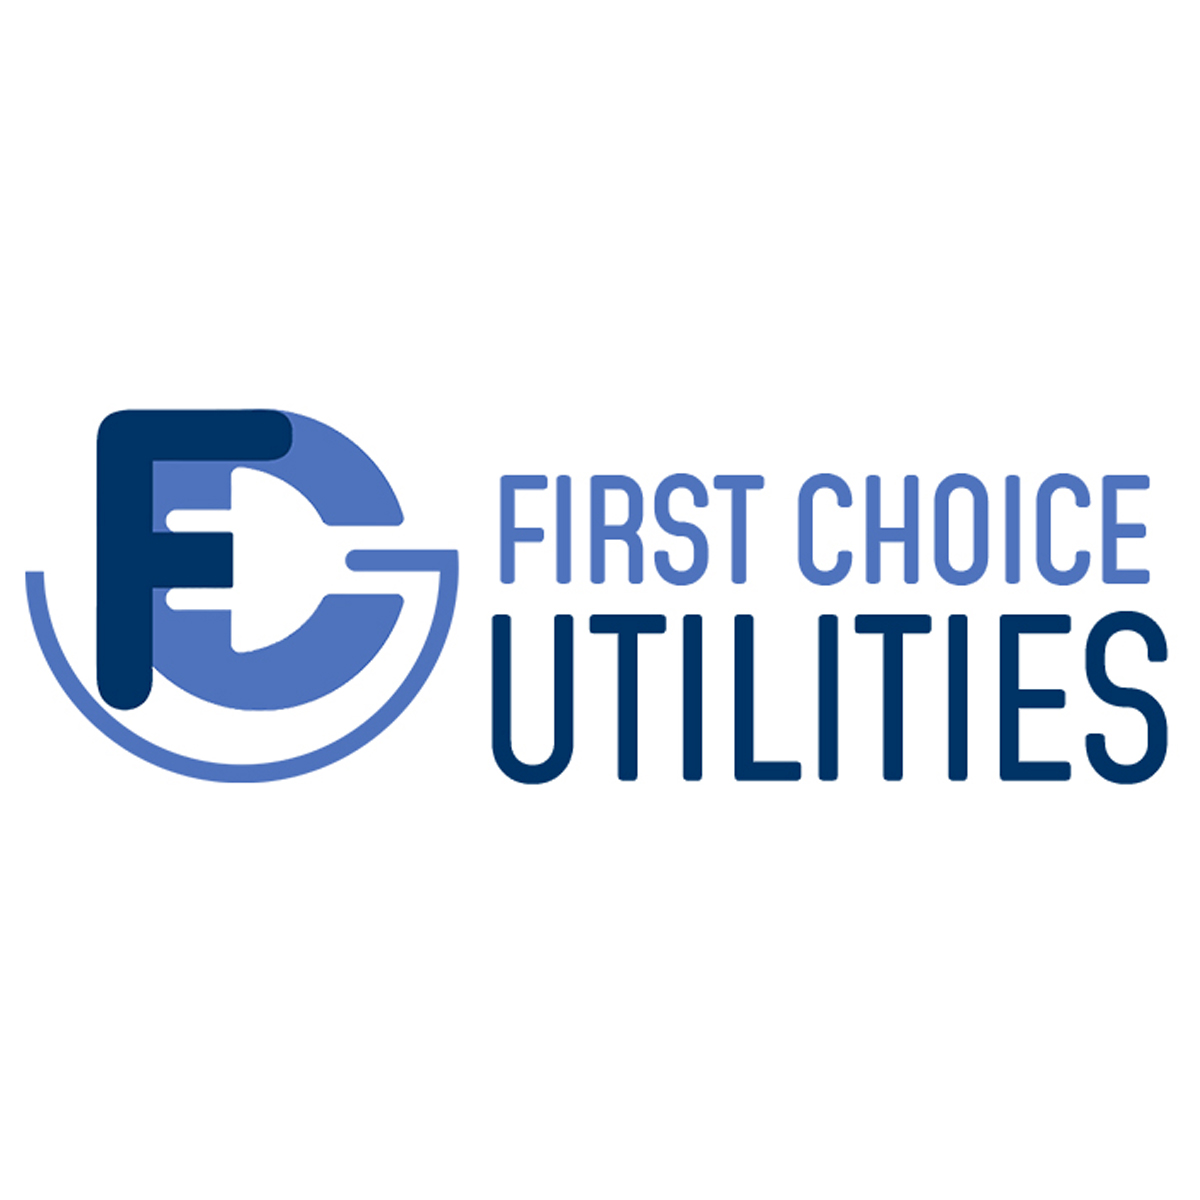 First Choice Utilities